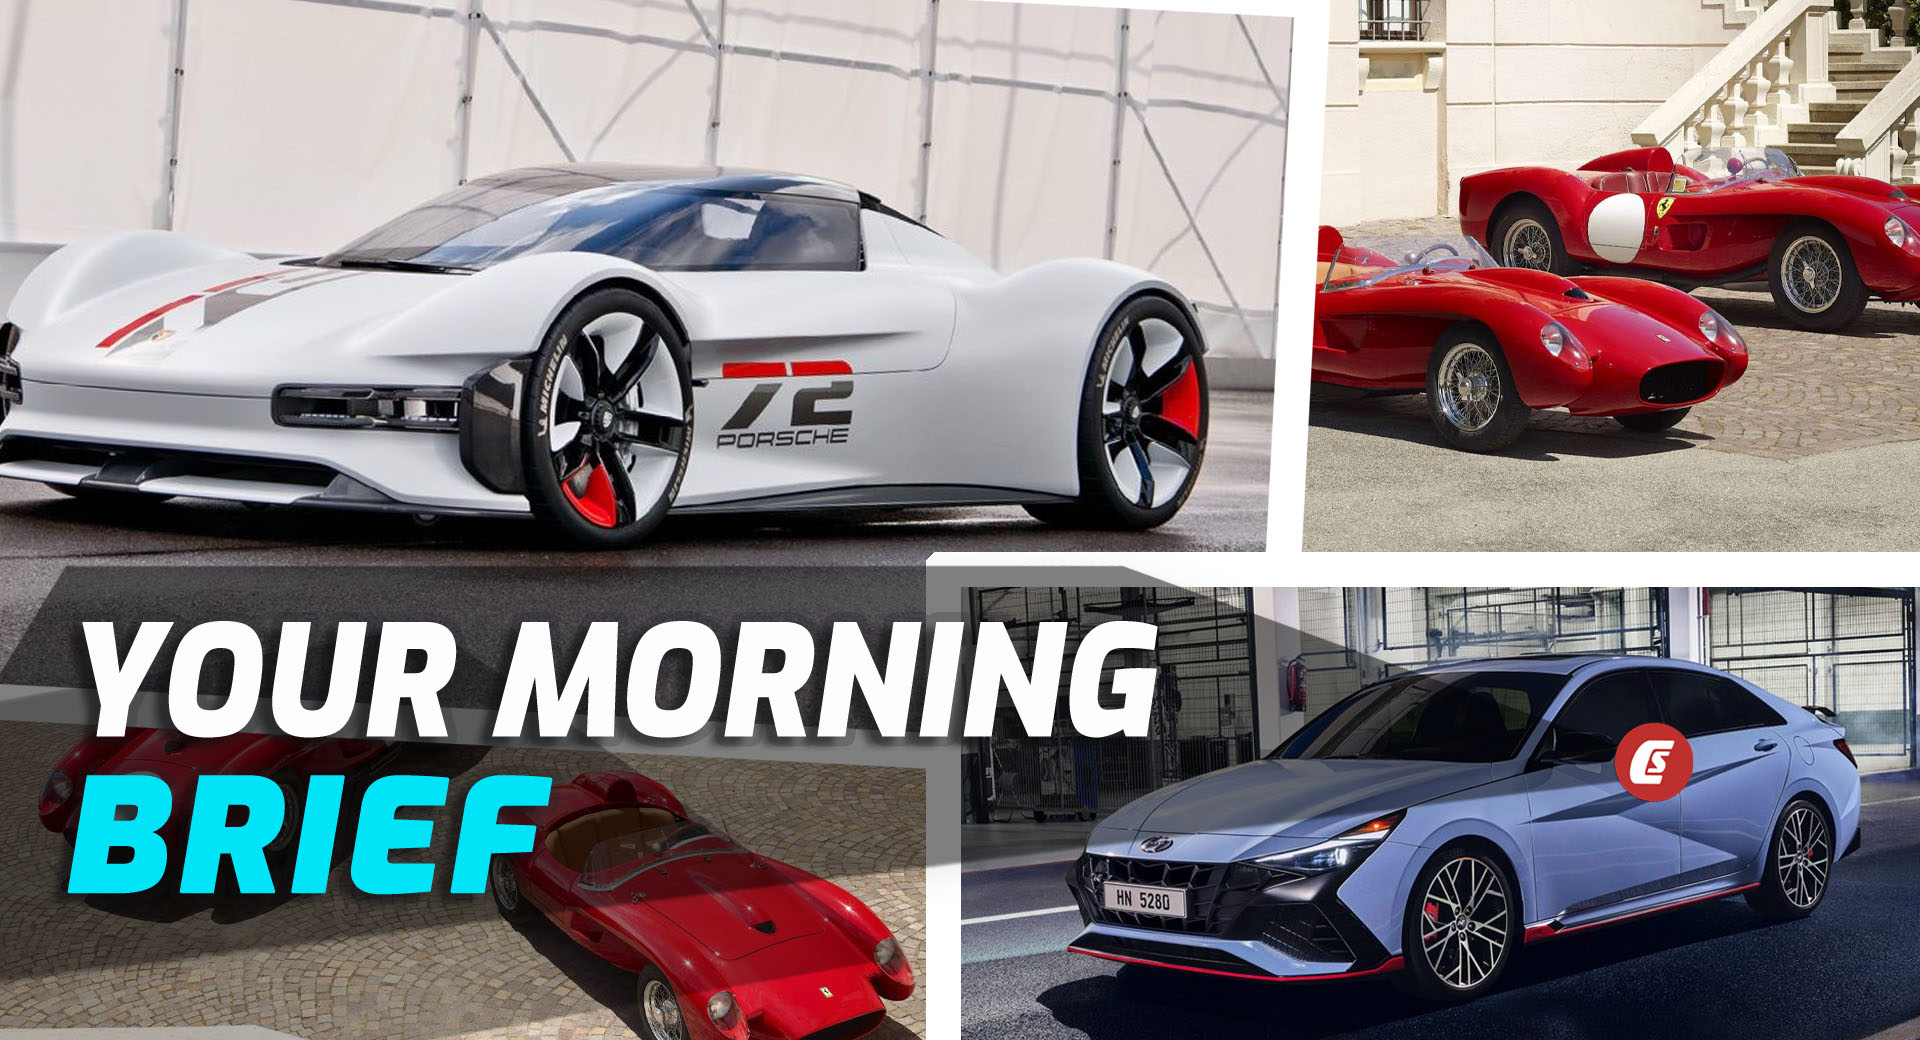 Porsche Vision GT, Australias i30 Sedan N, And 45mph Electric Ferrari Your Morning Brief Carscoops pic